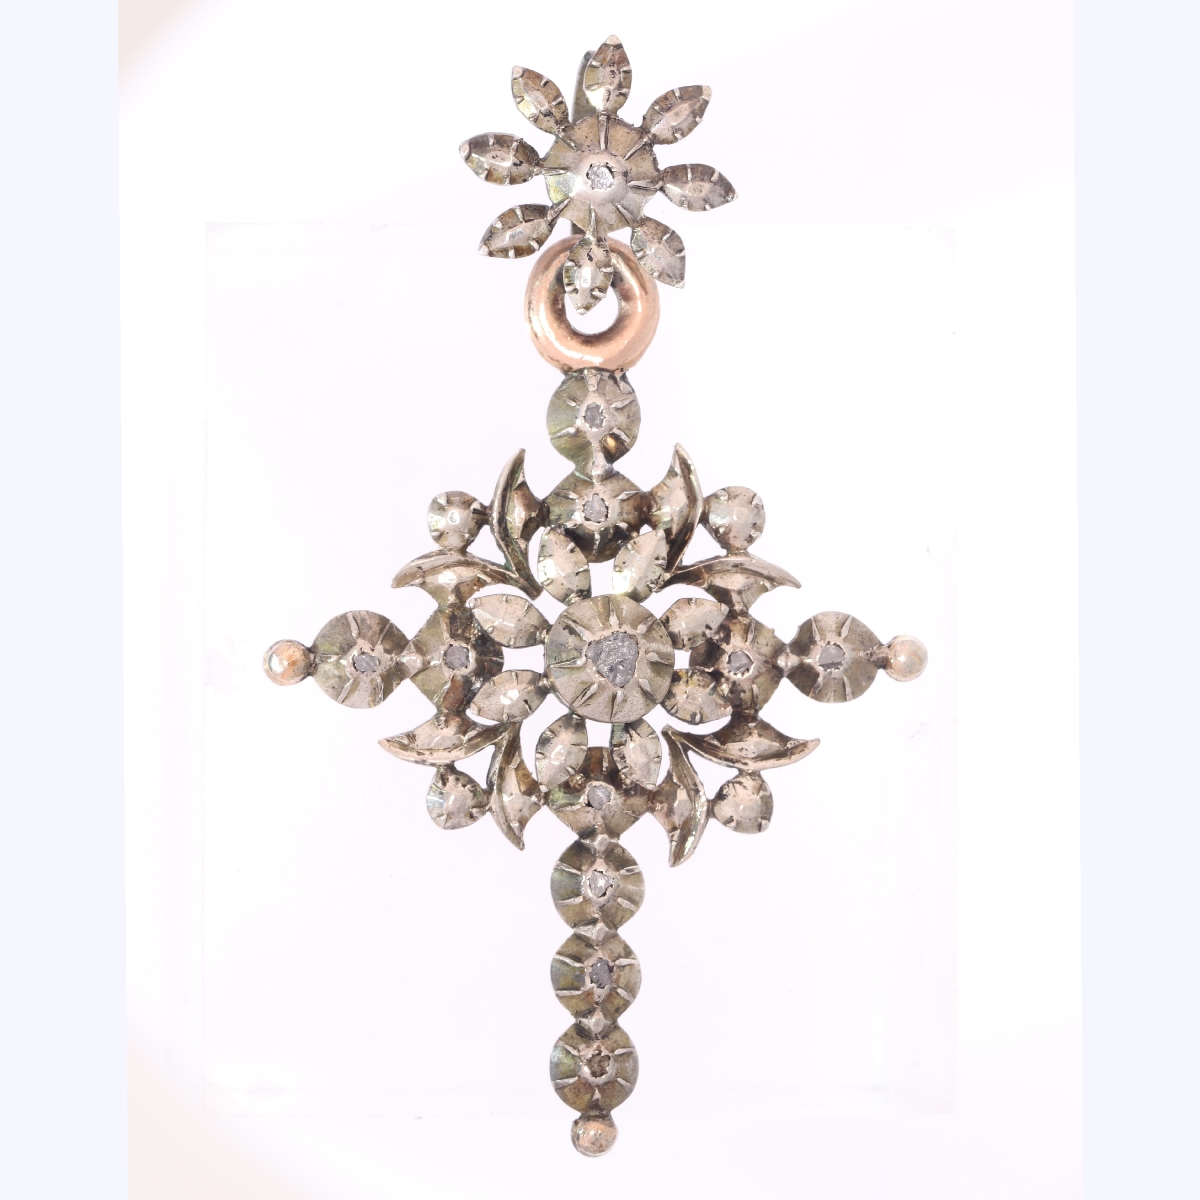 Typical Belgian Victorian rose cut diamond cross pendant 19th century